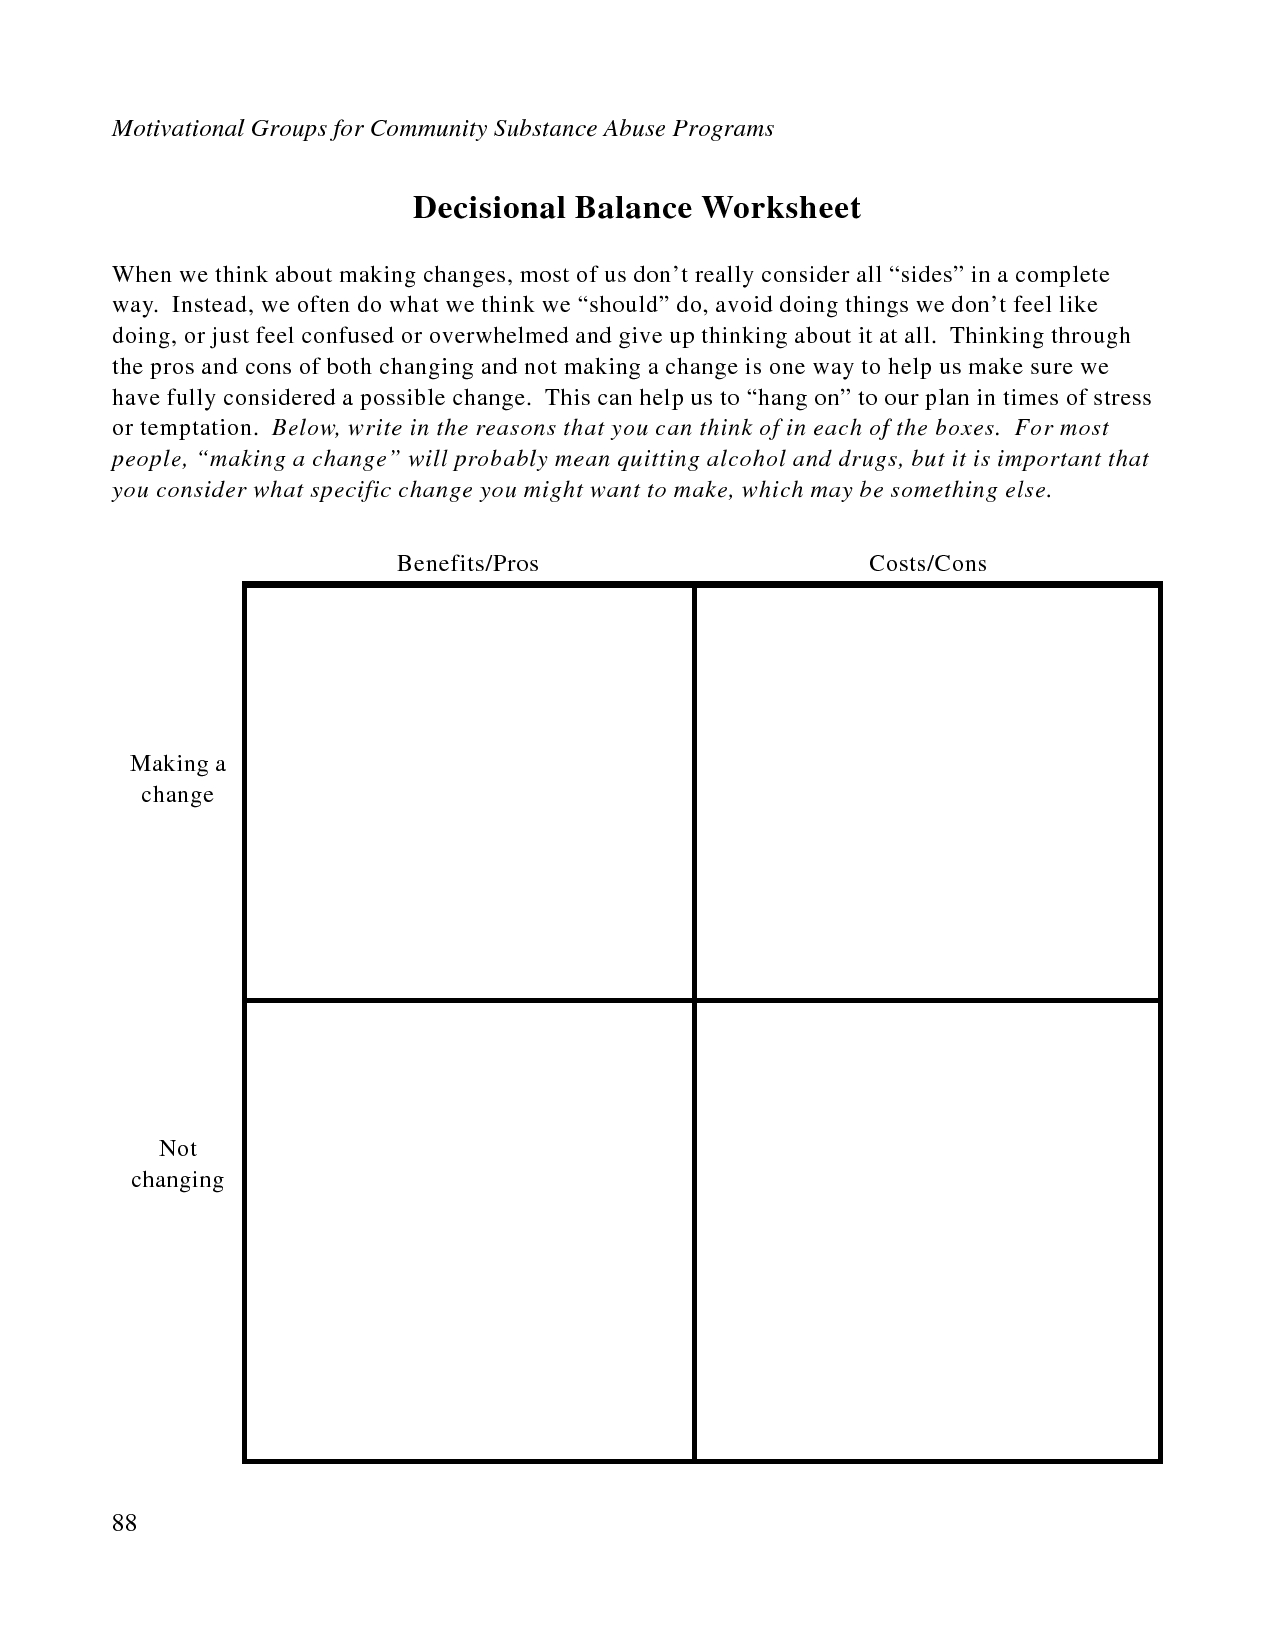 Free Printable Dbt Worksheets | Decisional Balance Worksheet - Pdf - Free Printable Therapy Worksheets